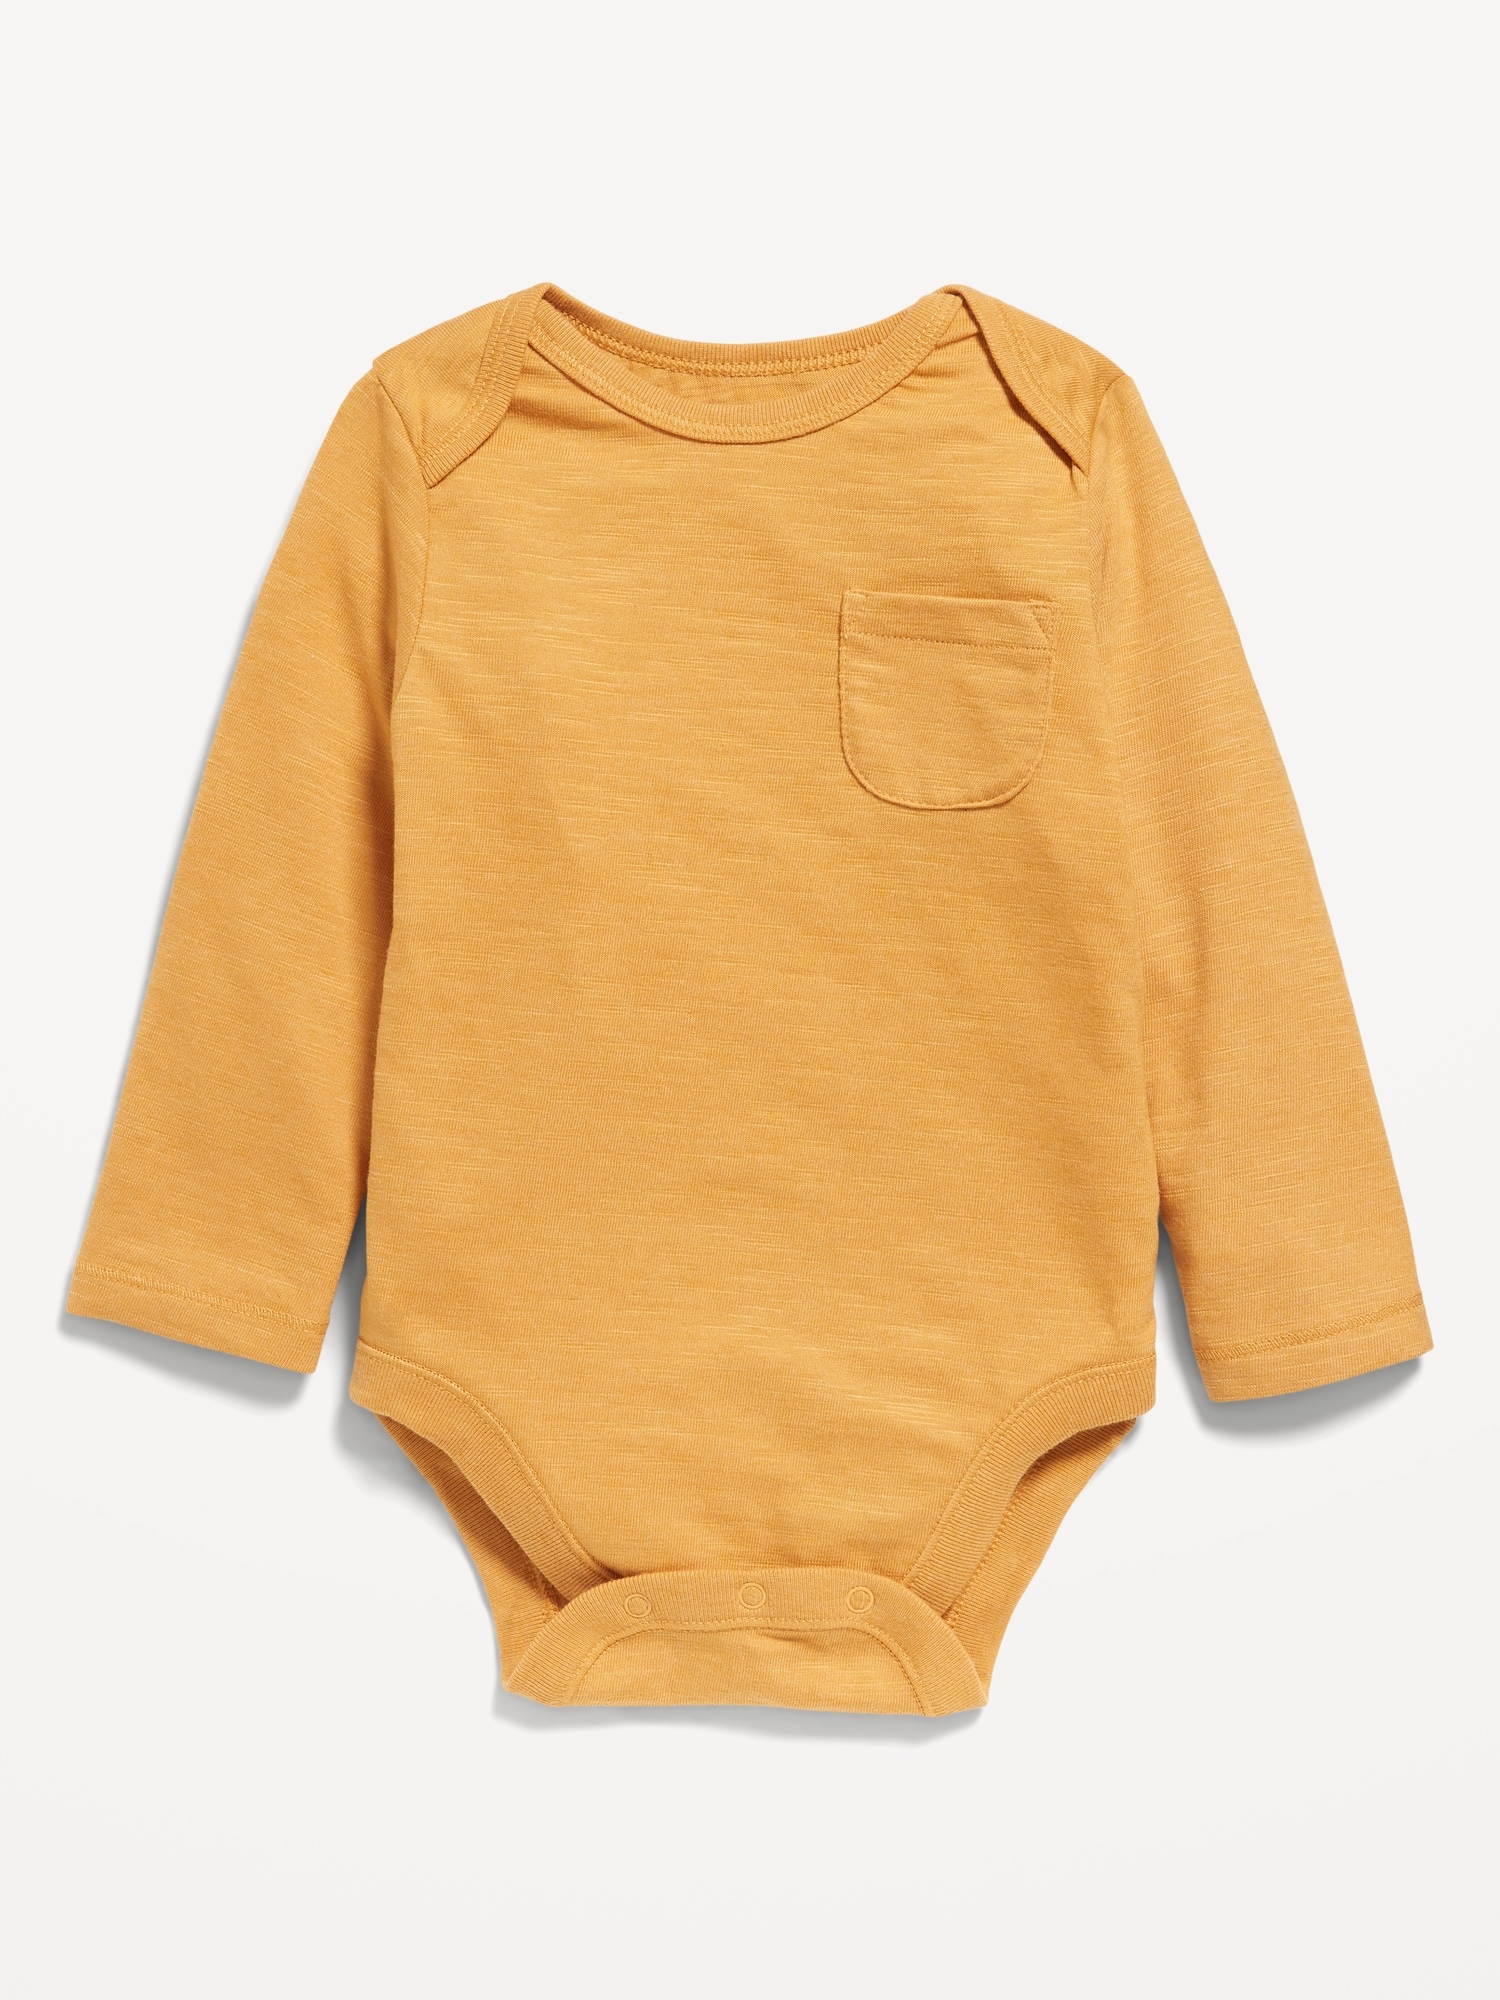 Unisex Long-Sleeve Slub-Knit Bodysuit for Baby